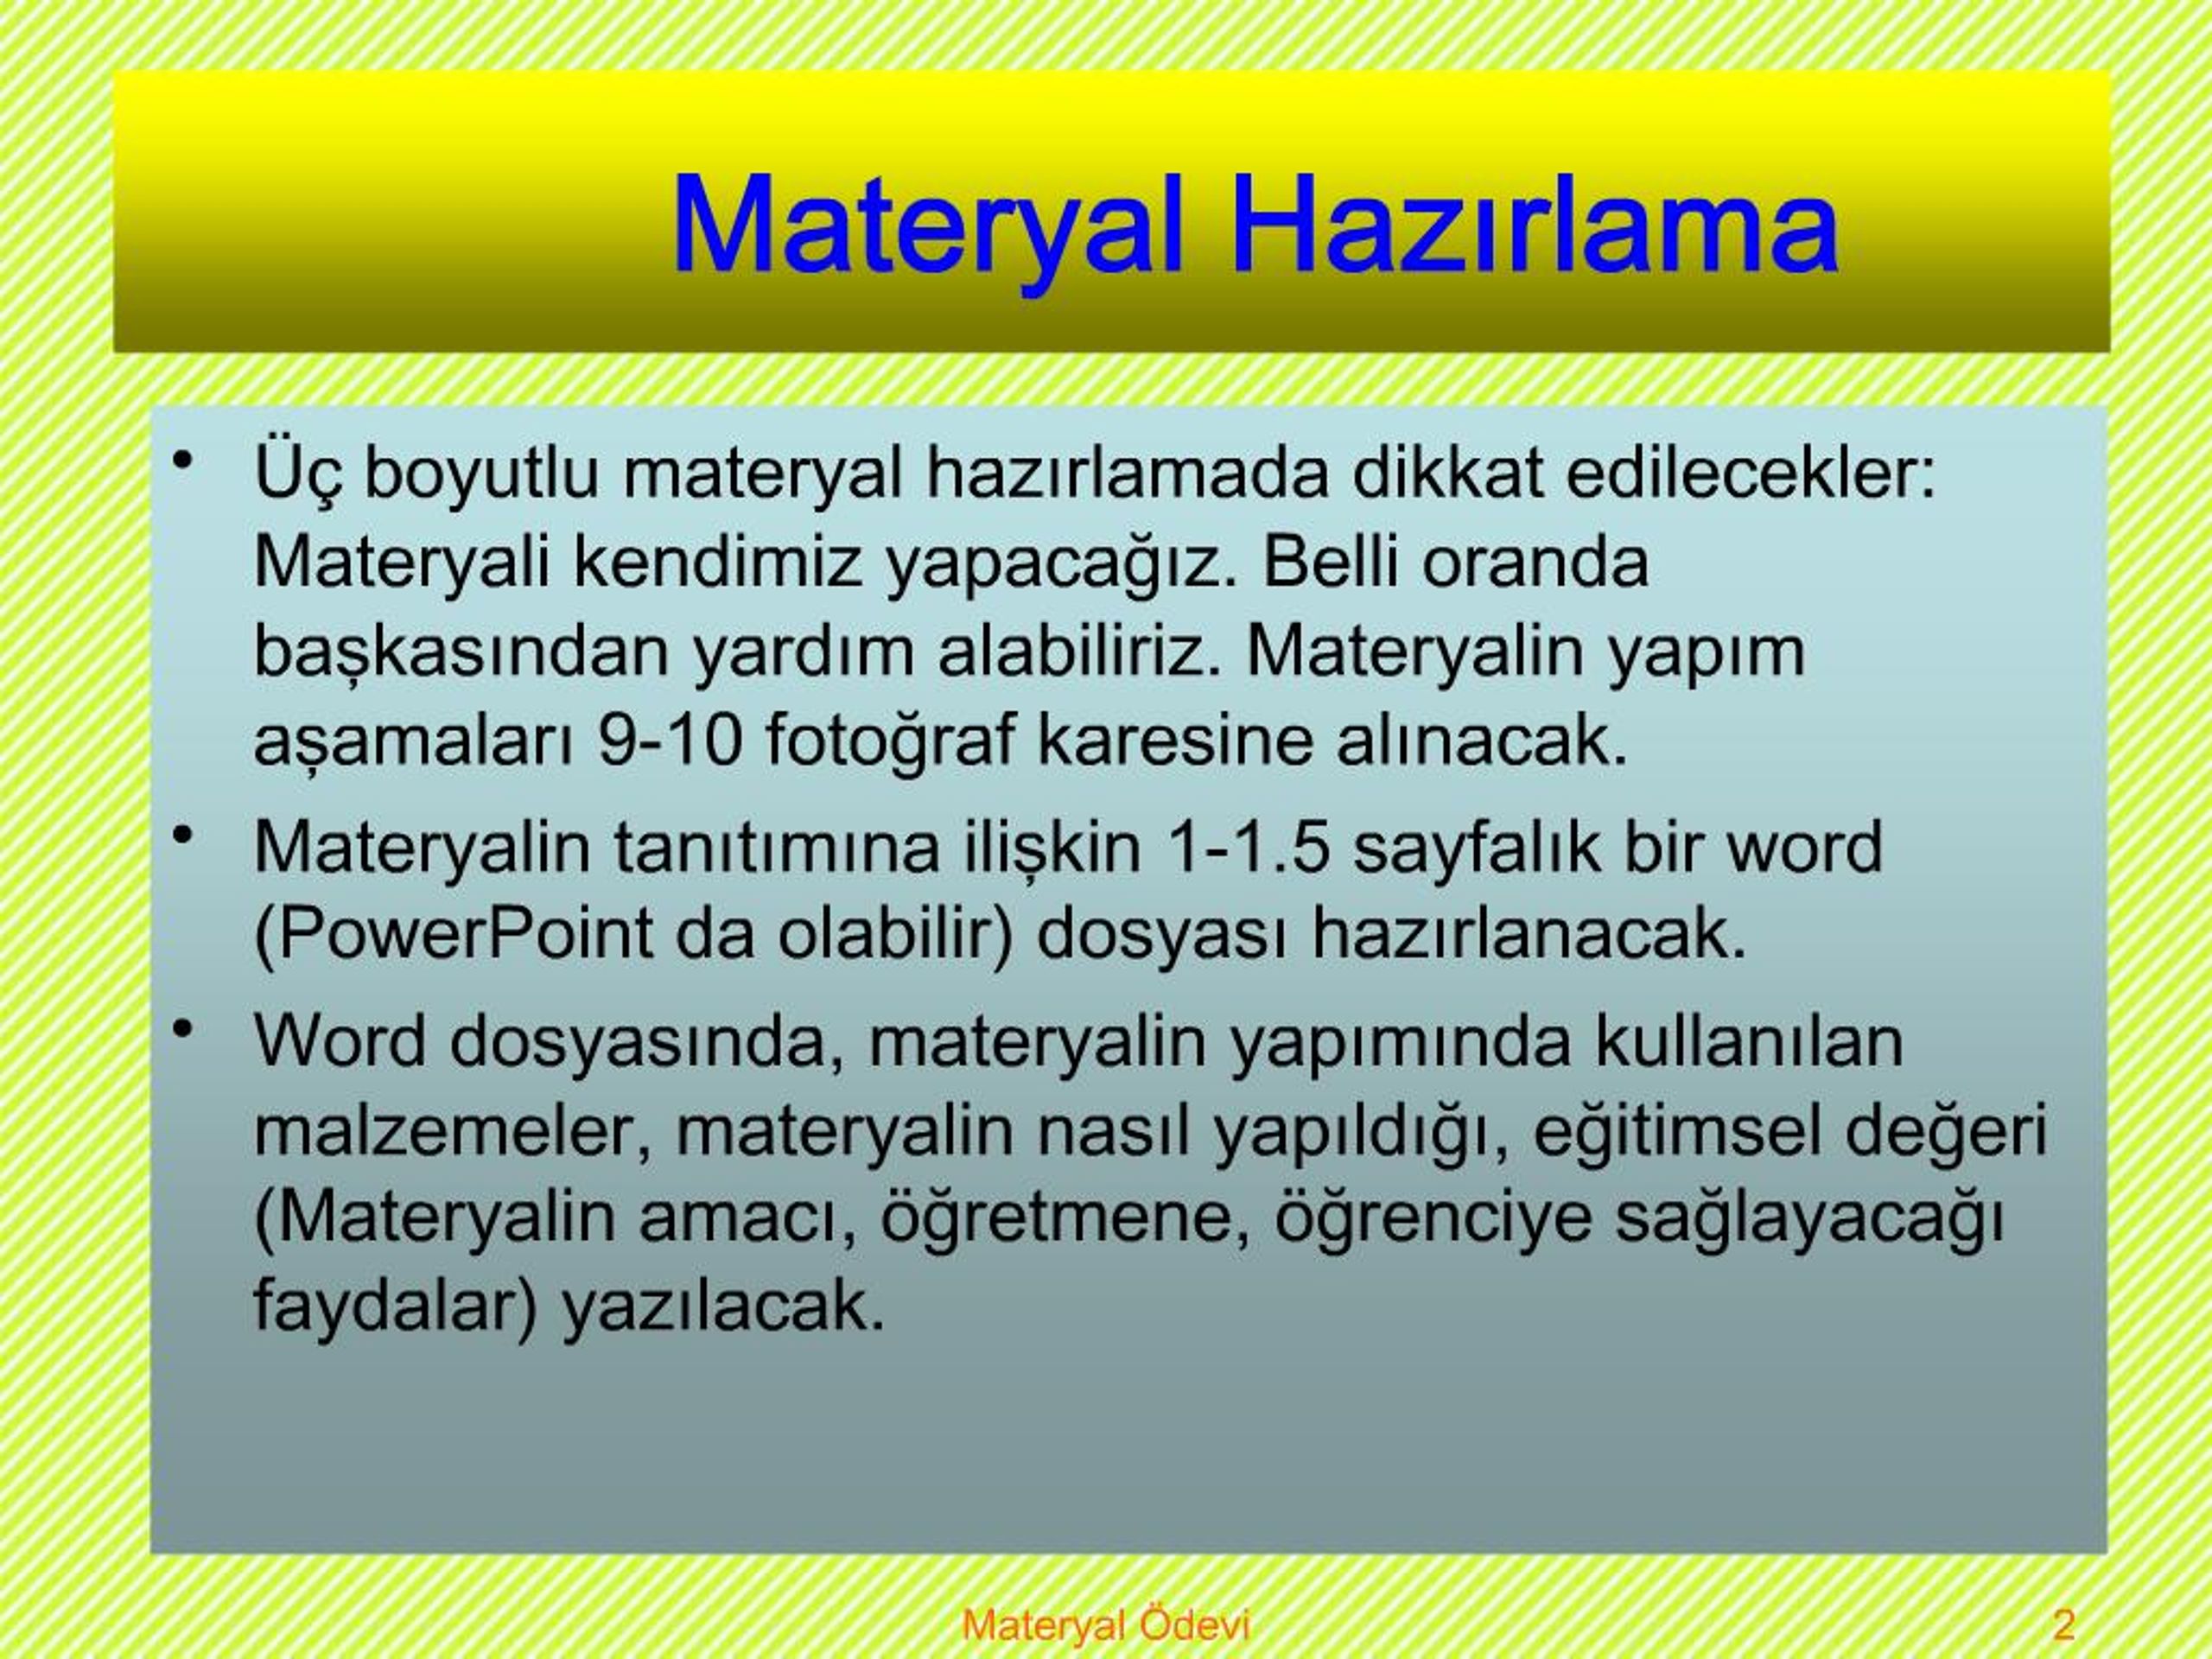 ppt materyal hazirlama powerpoint presentation free download id 861170